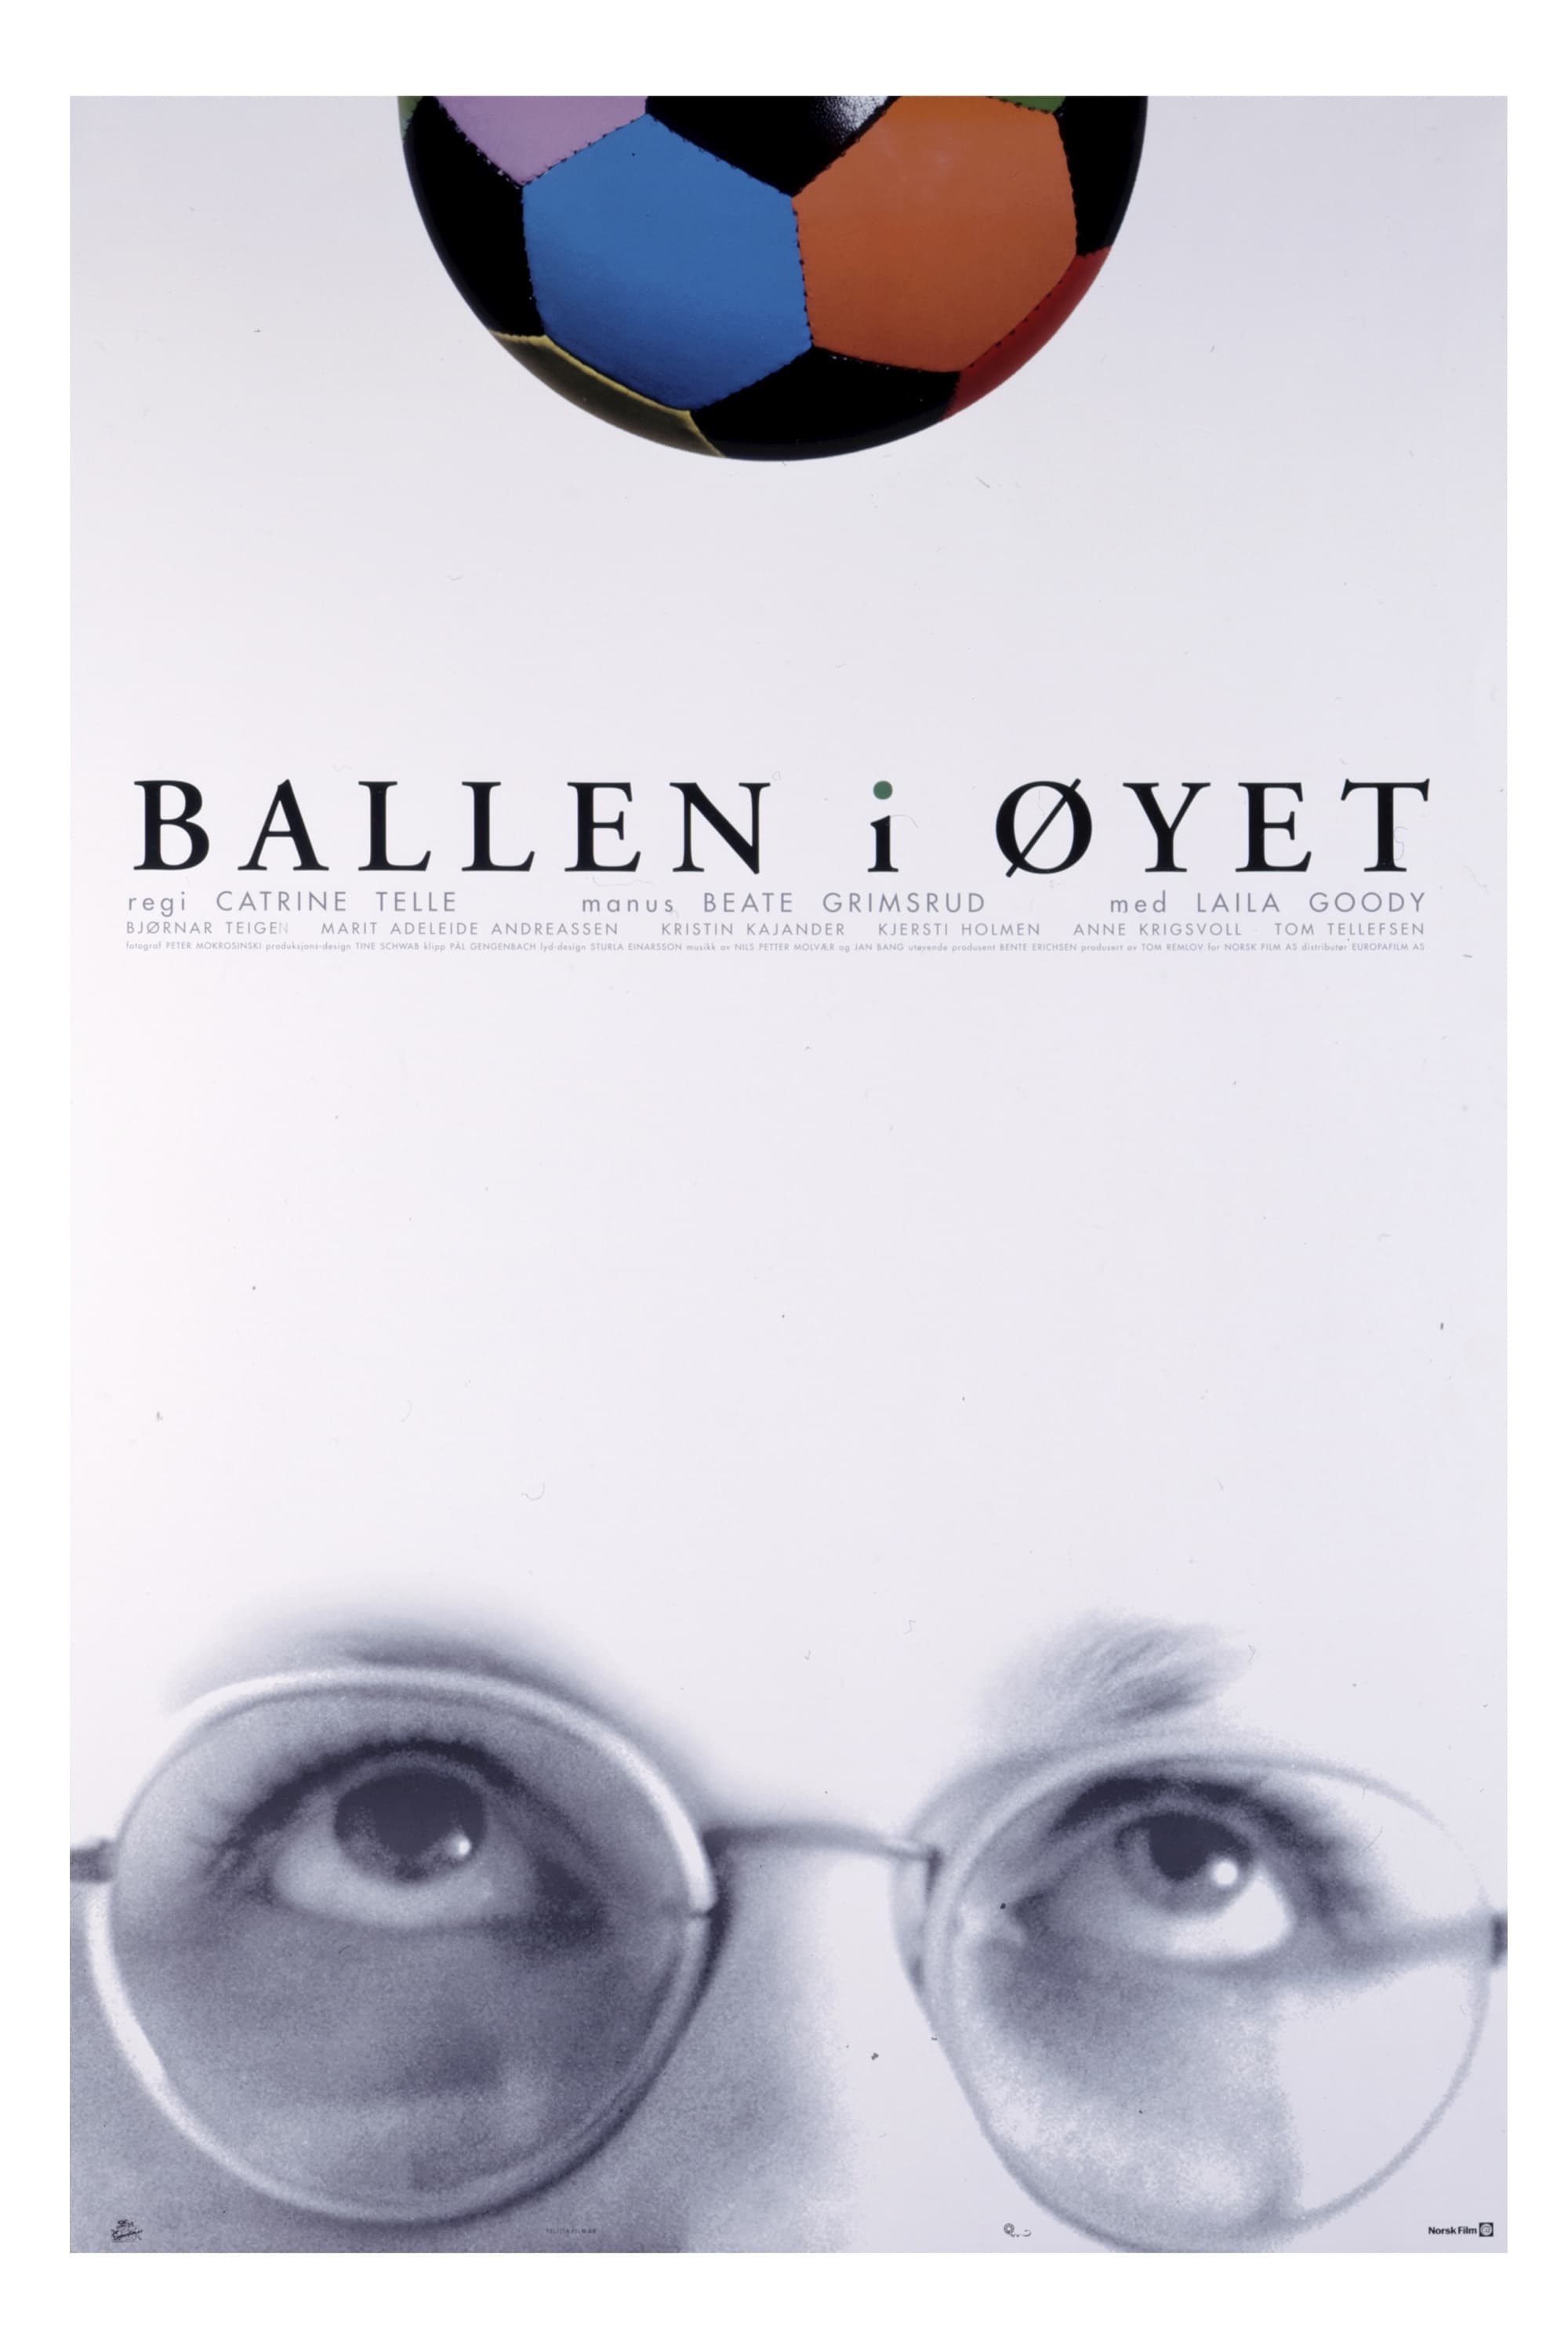 Ballen i øyet (2000)